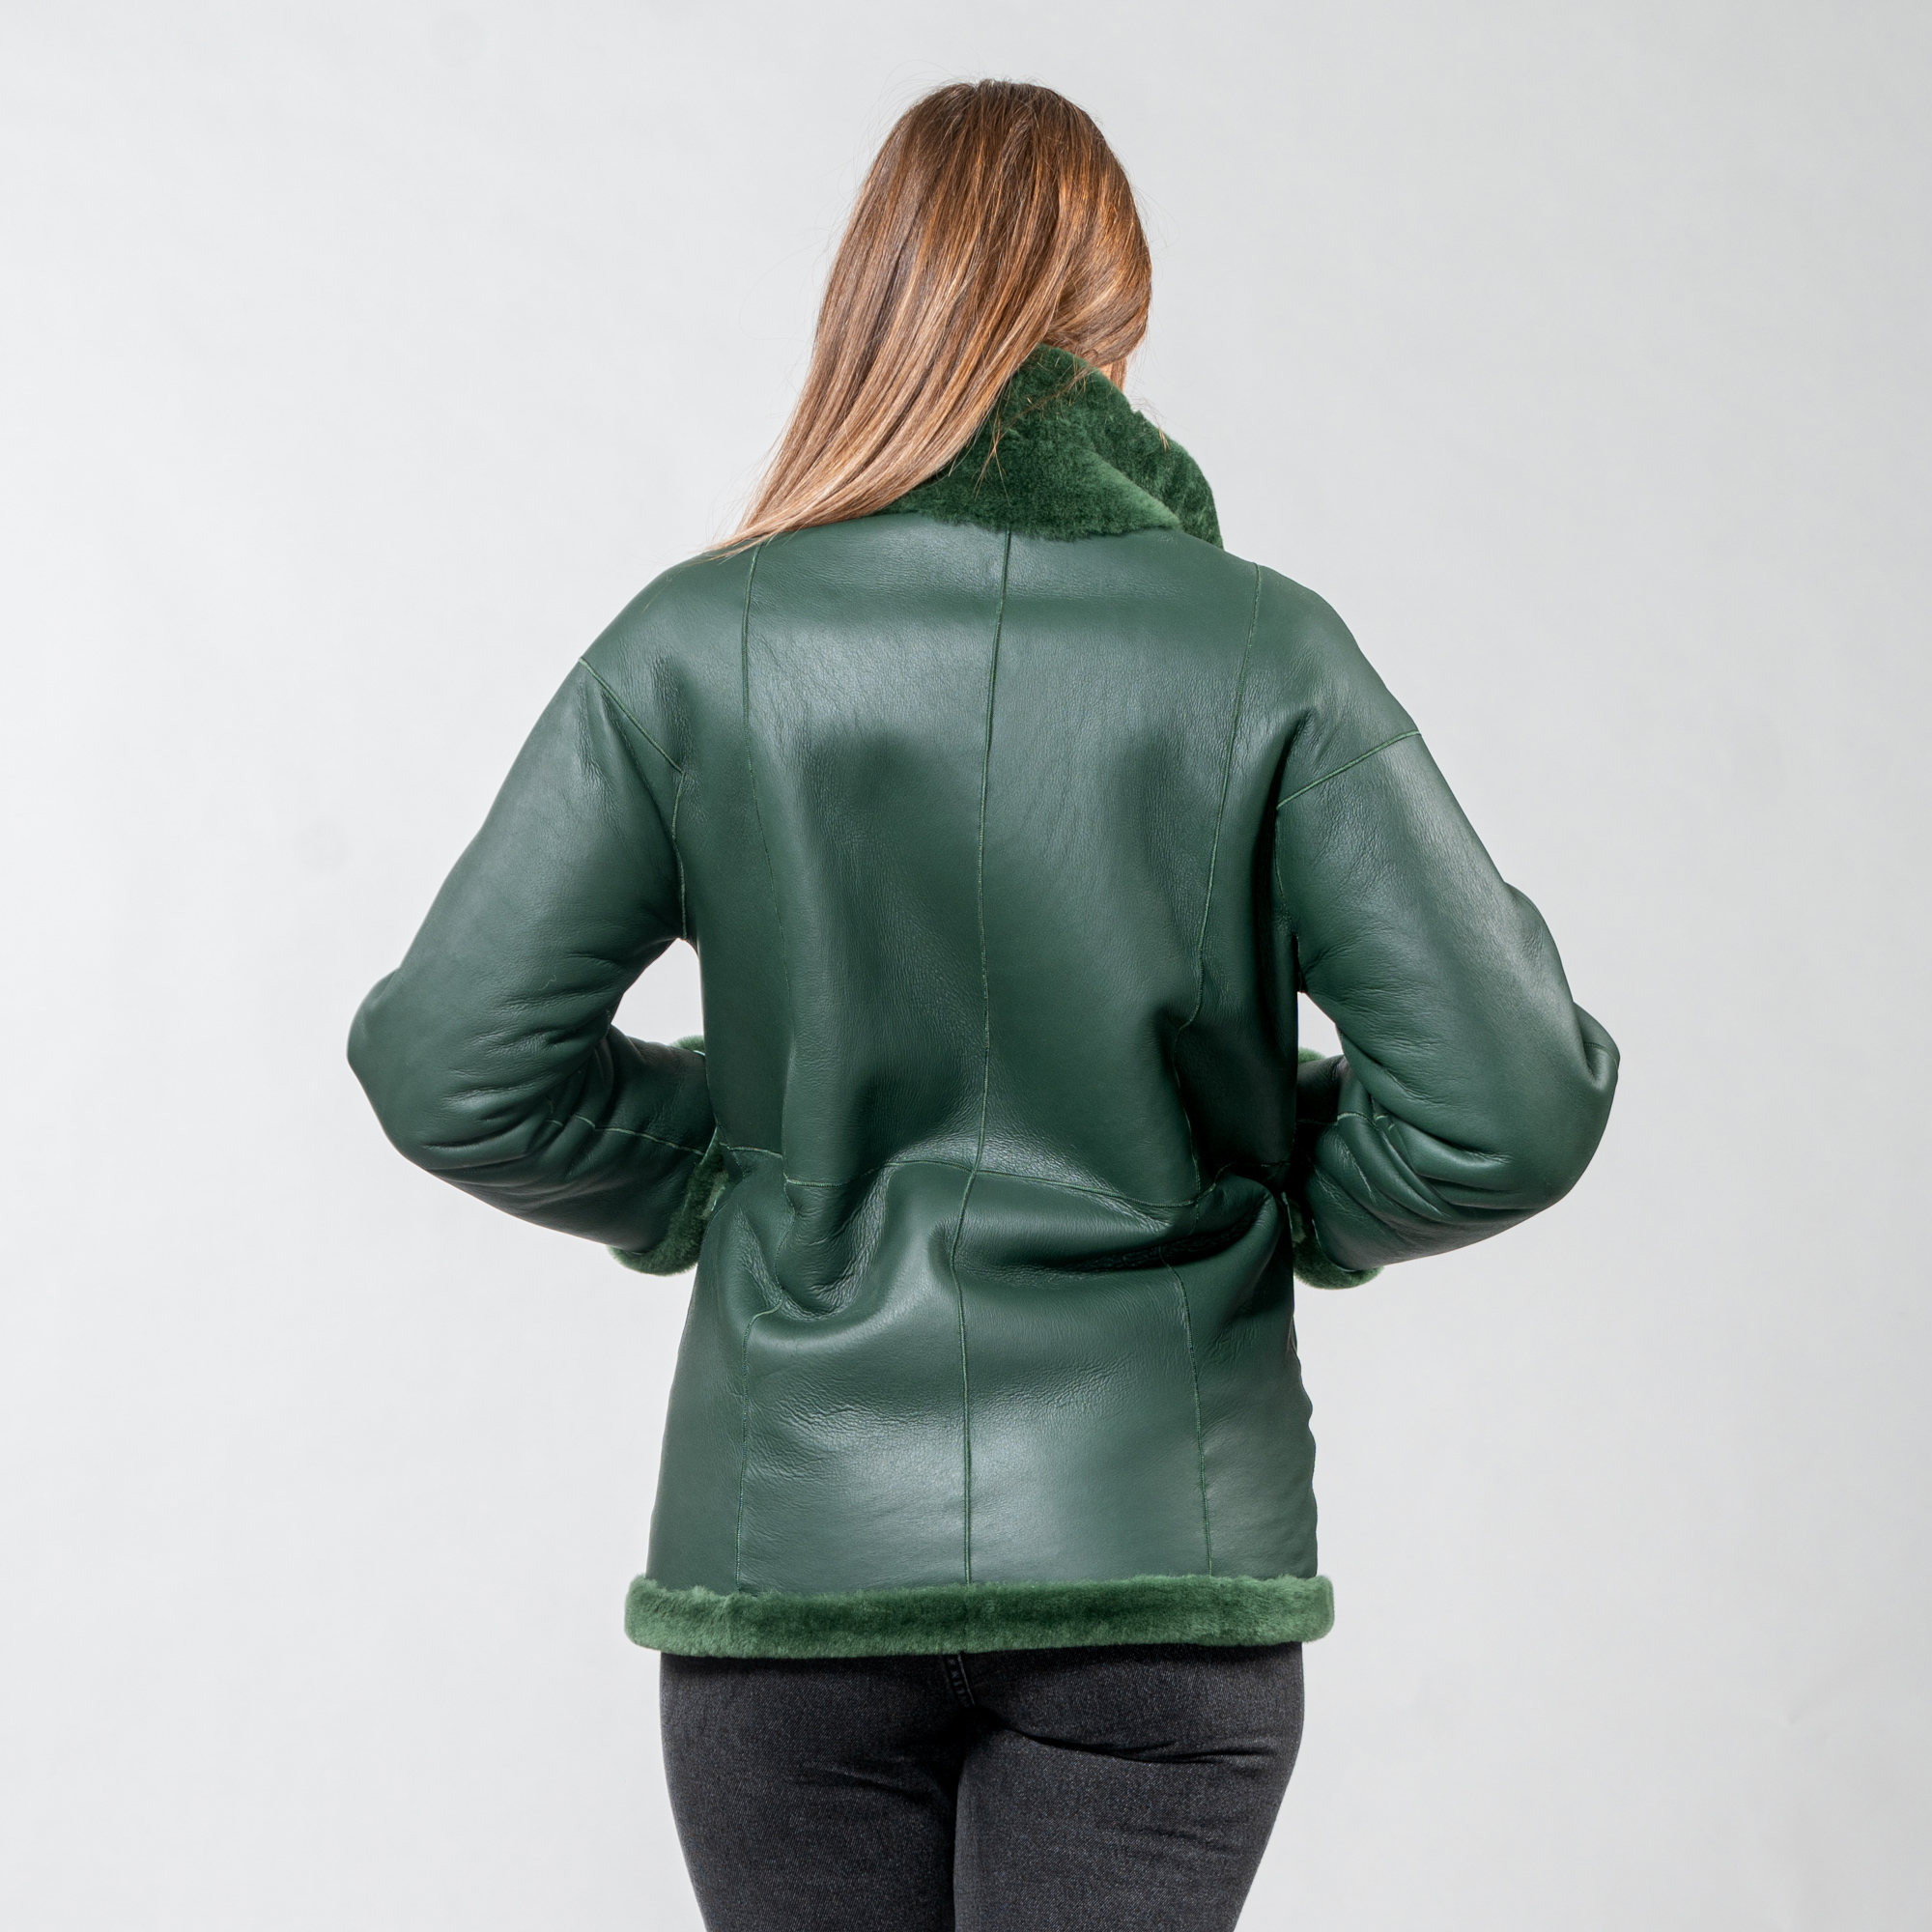 Reversible sheepskin jacket in green color